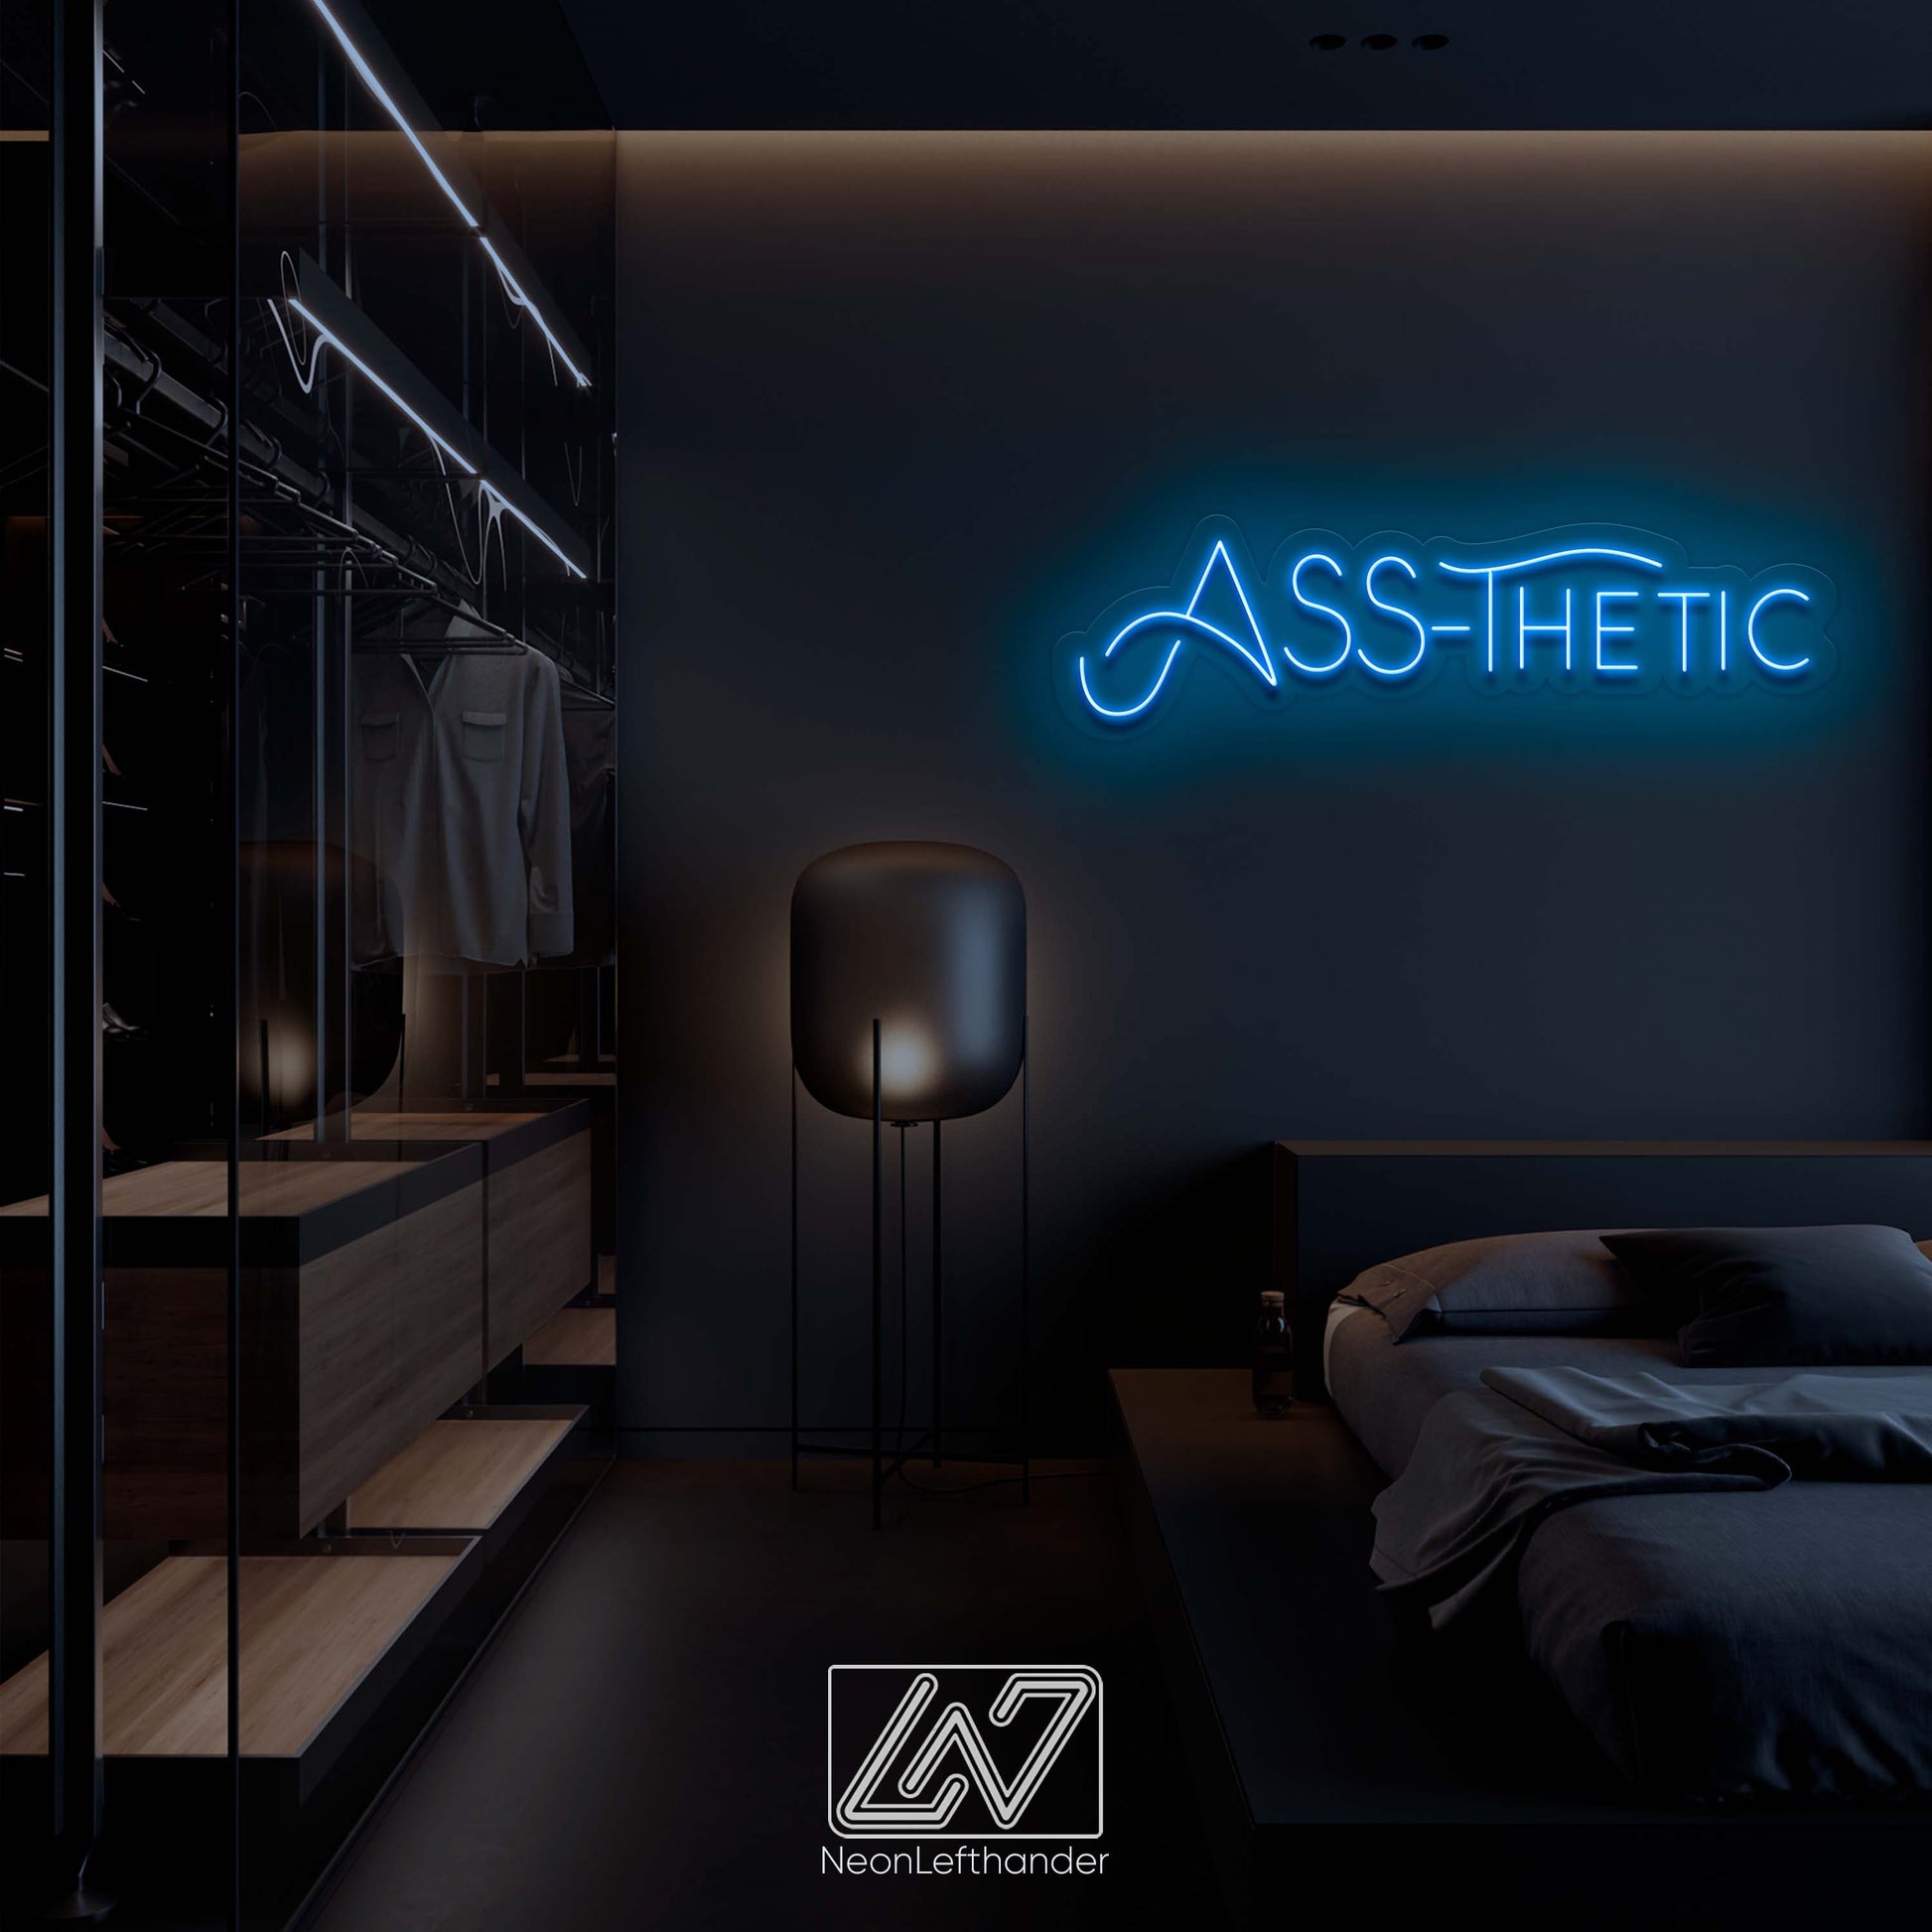 Ass-Thetic - LED Neon Sign, Interior Decor, Room decor, Wall Decor, Custom Sign, Neon For Home